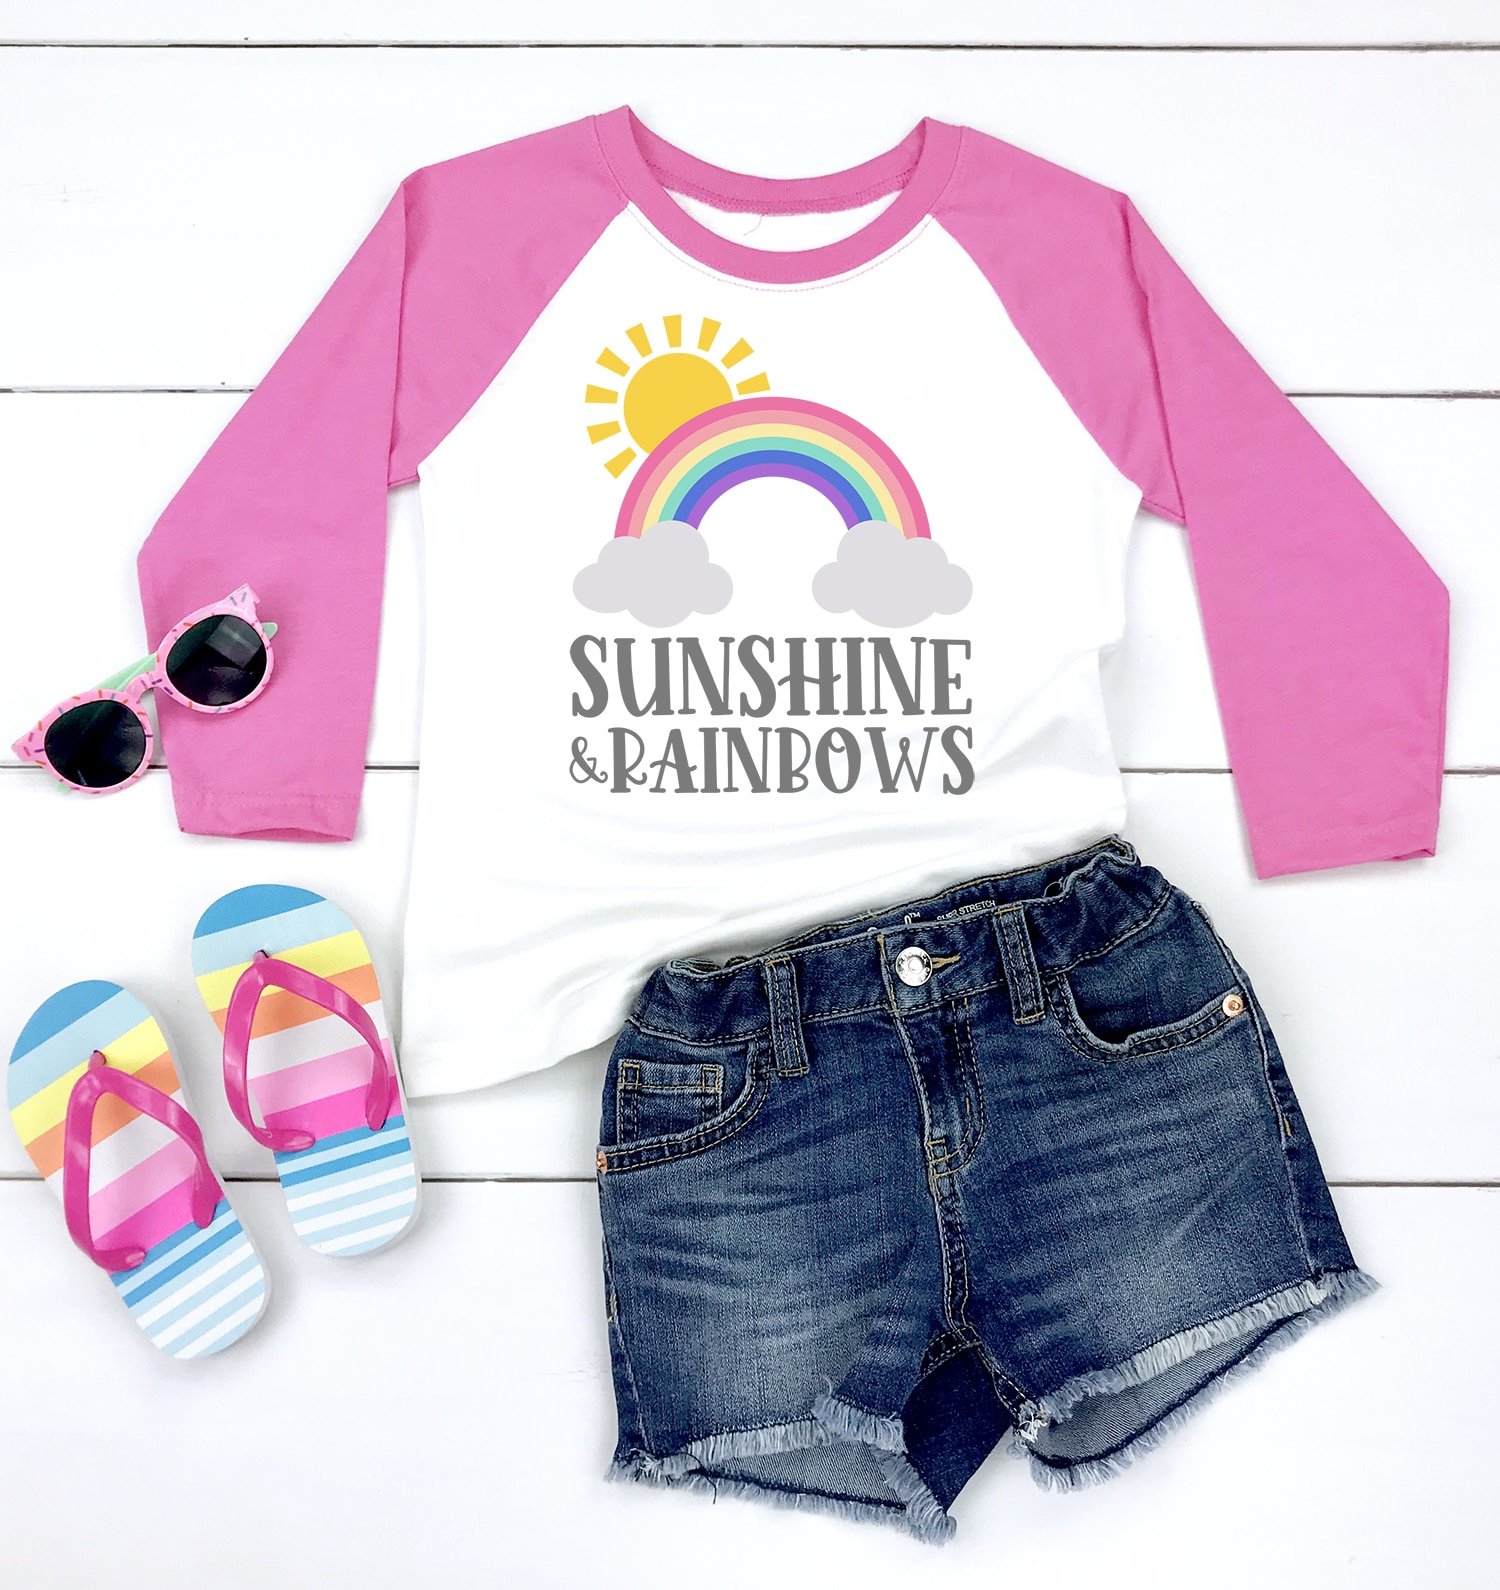 Sunshine and Rainbows pink raglan shirt with denim shorts, striped flip flops, and pink sunglasses